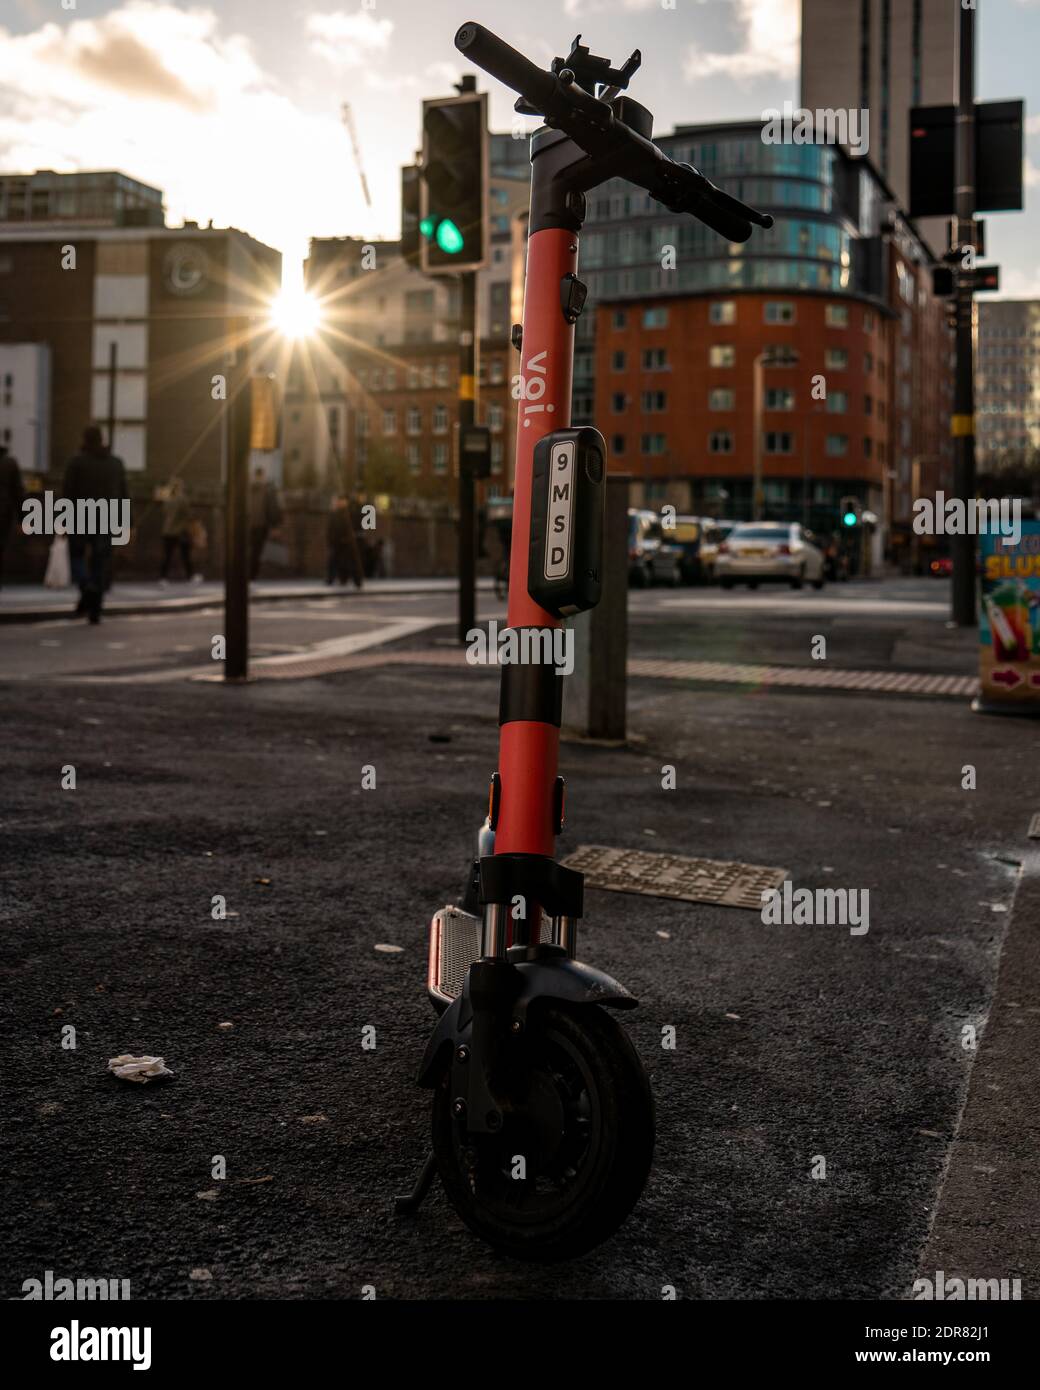 Birmingham, United Kingdom - December 12 2020: Voi. Electric Scooter on Birmingham street with setting sun Stock Photo